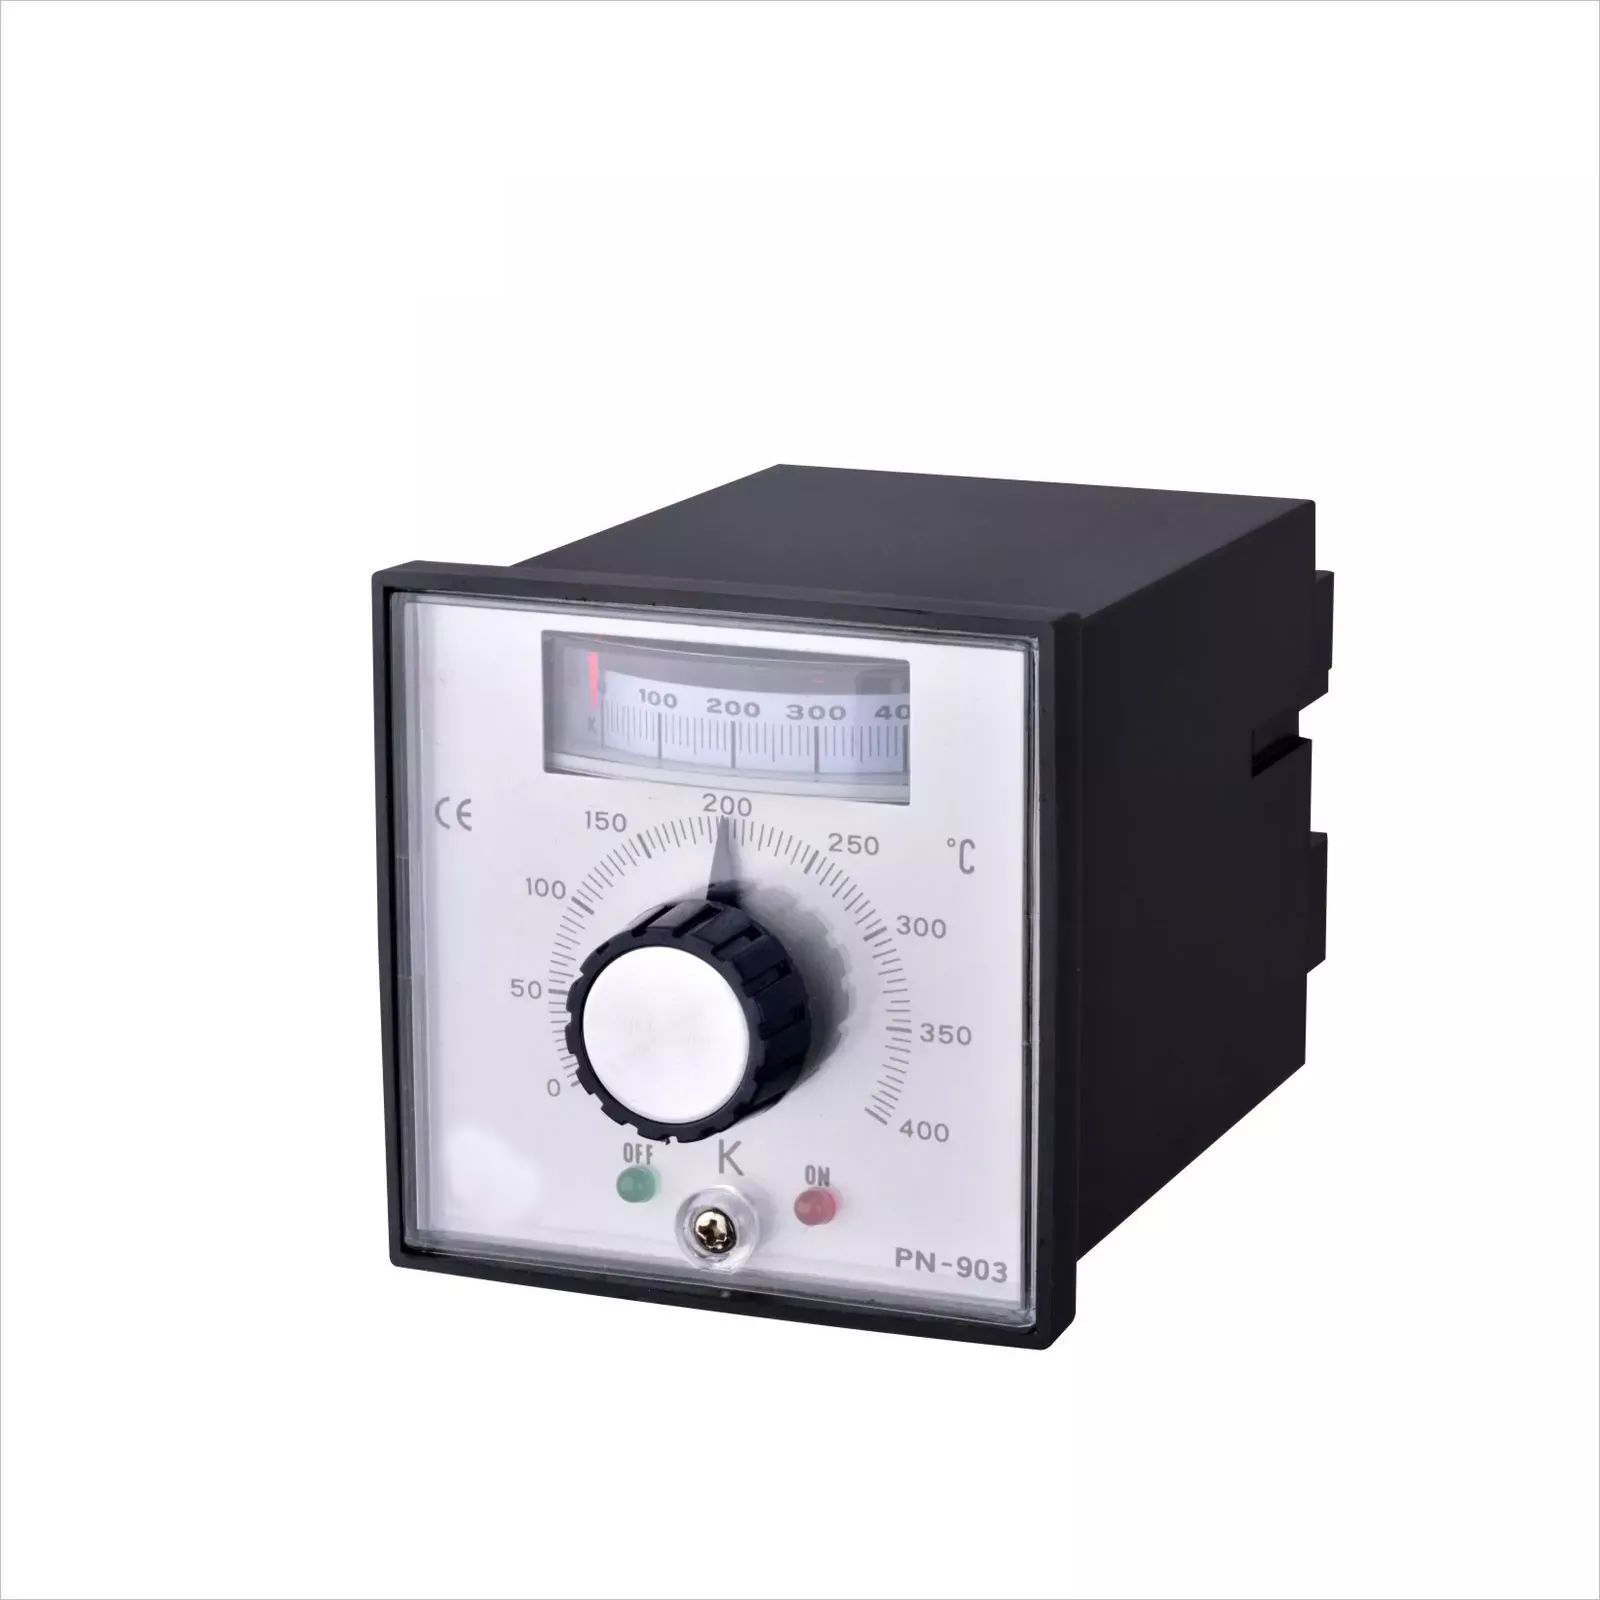 PN-903 Performance Stable analog digital display panel meter with Knob